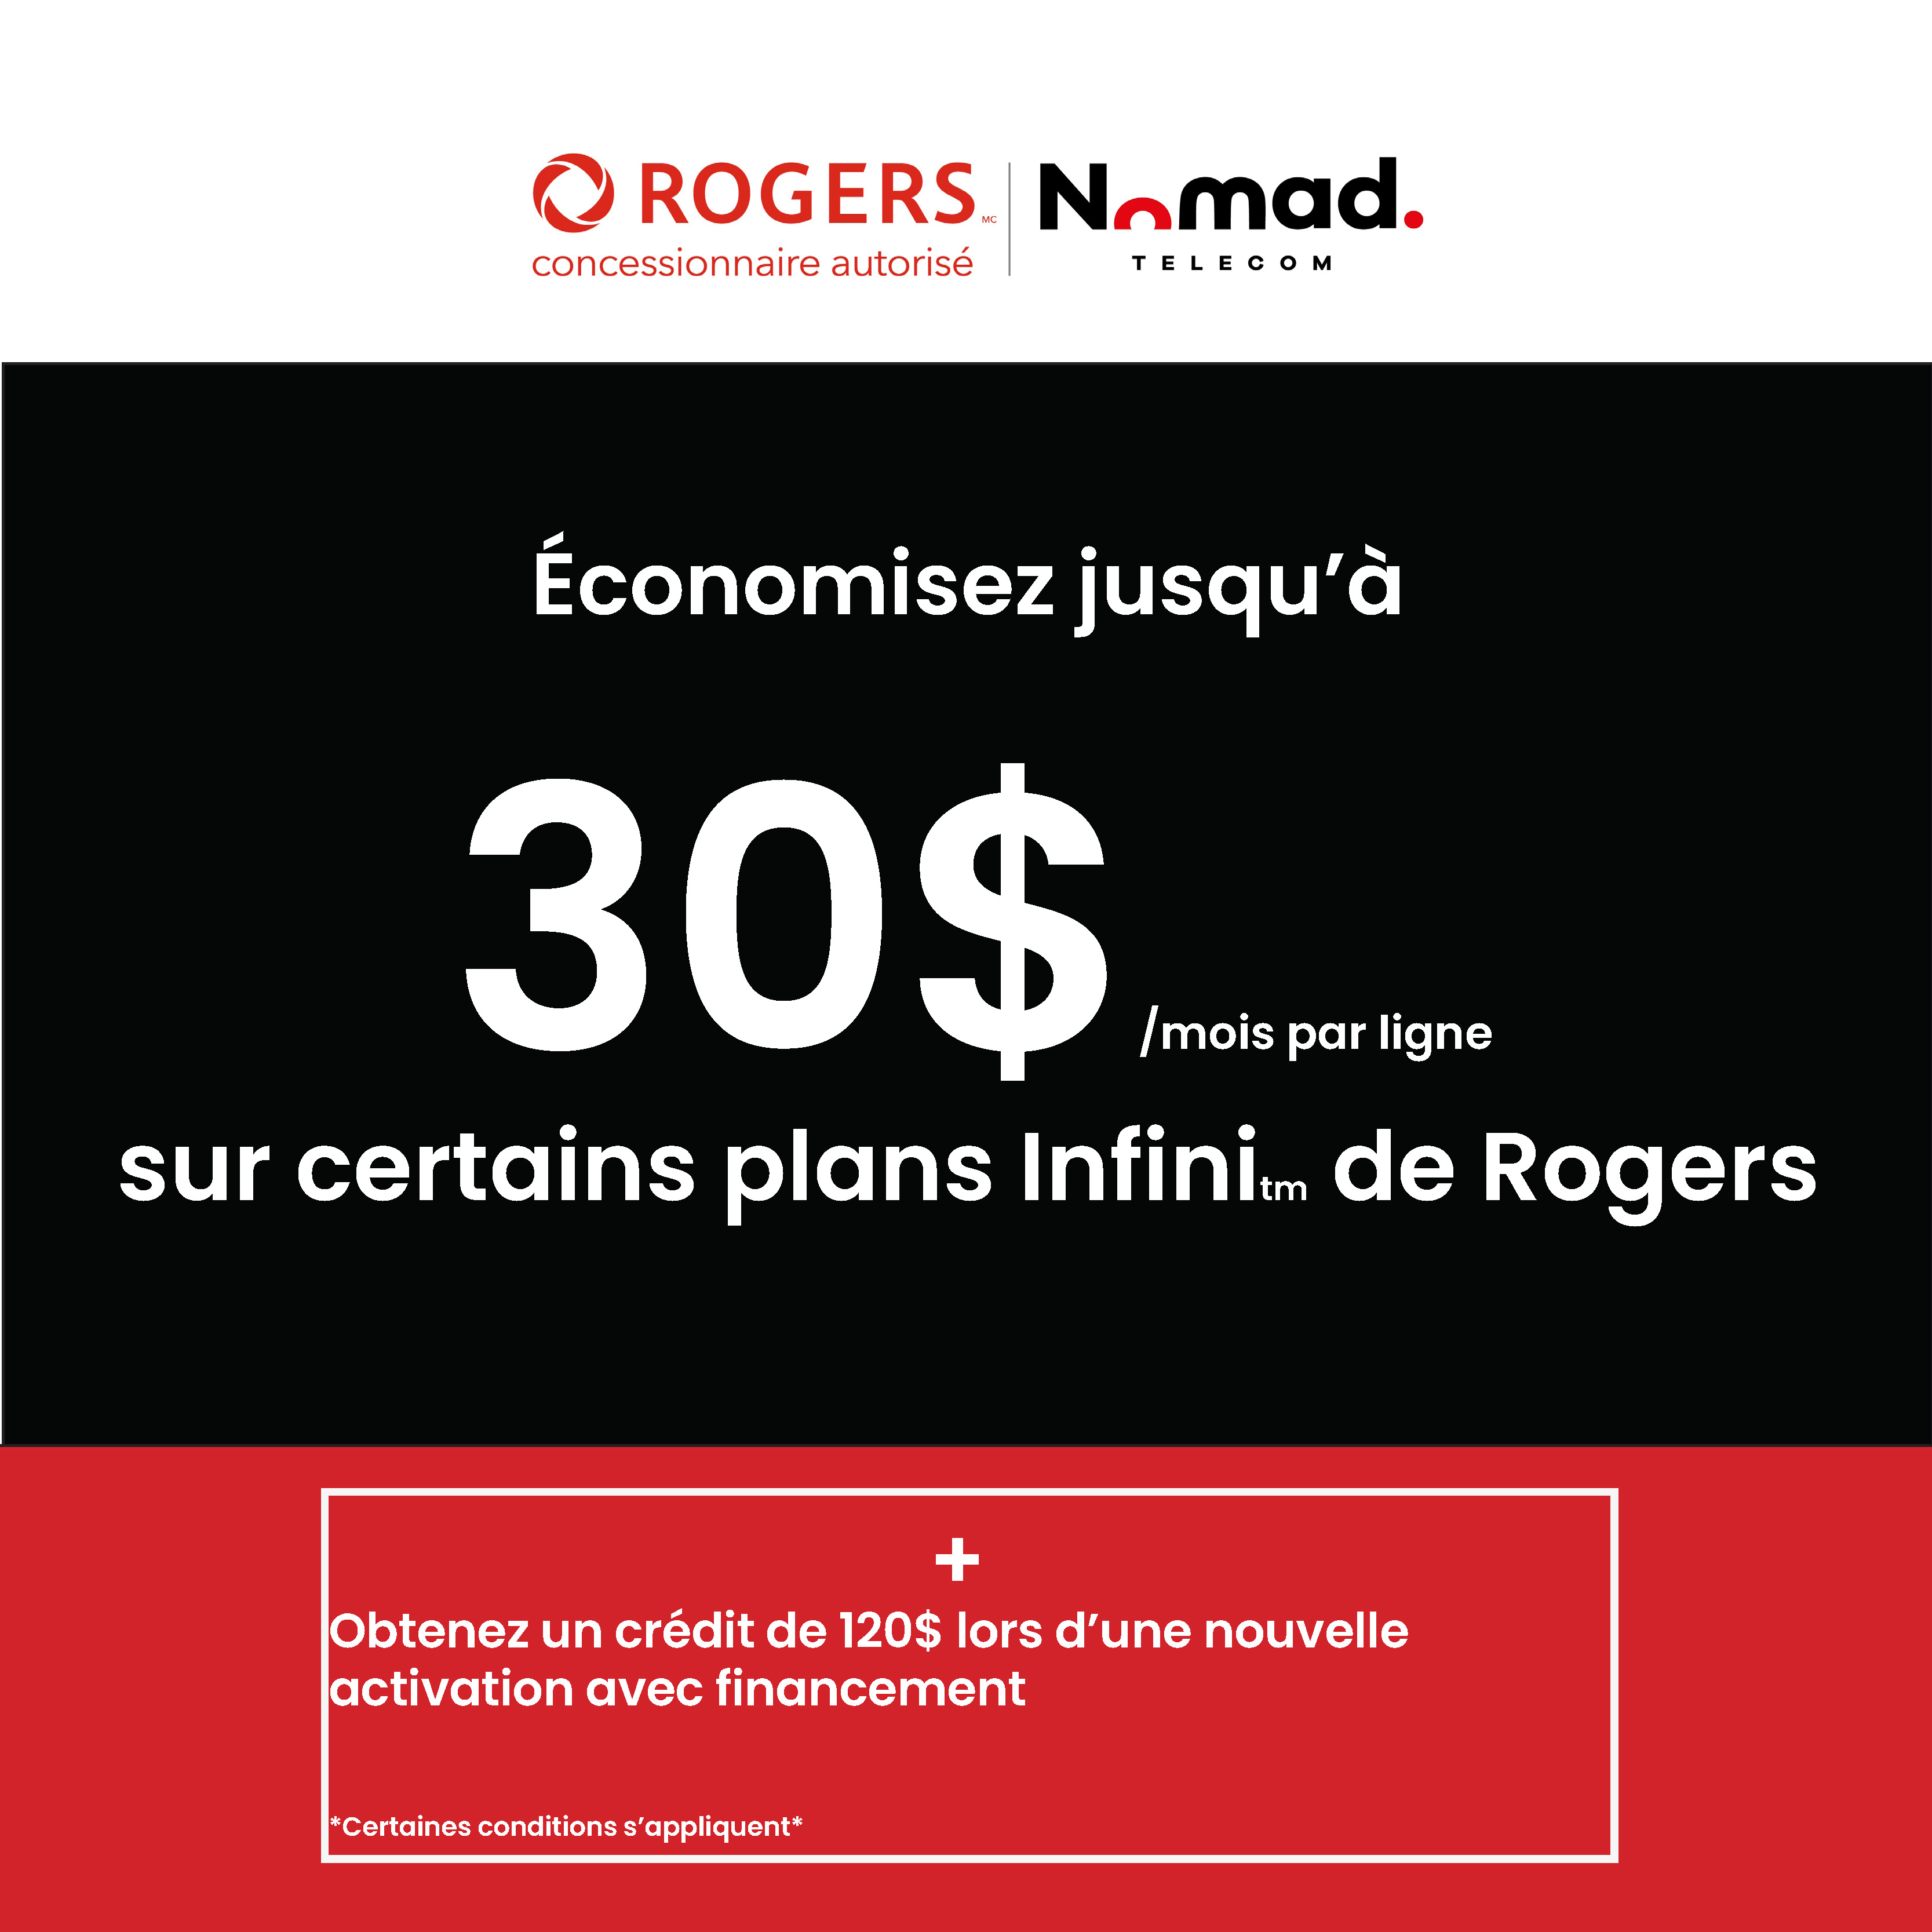 Rogers - Nomad Telecom